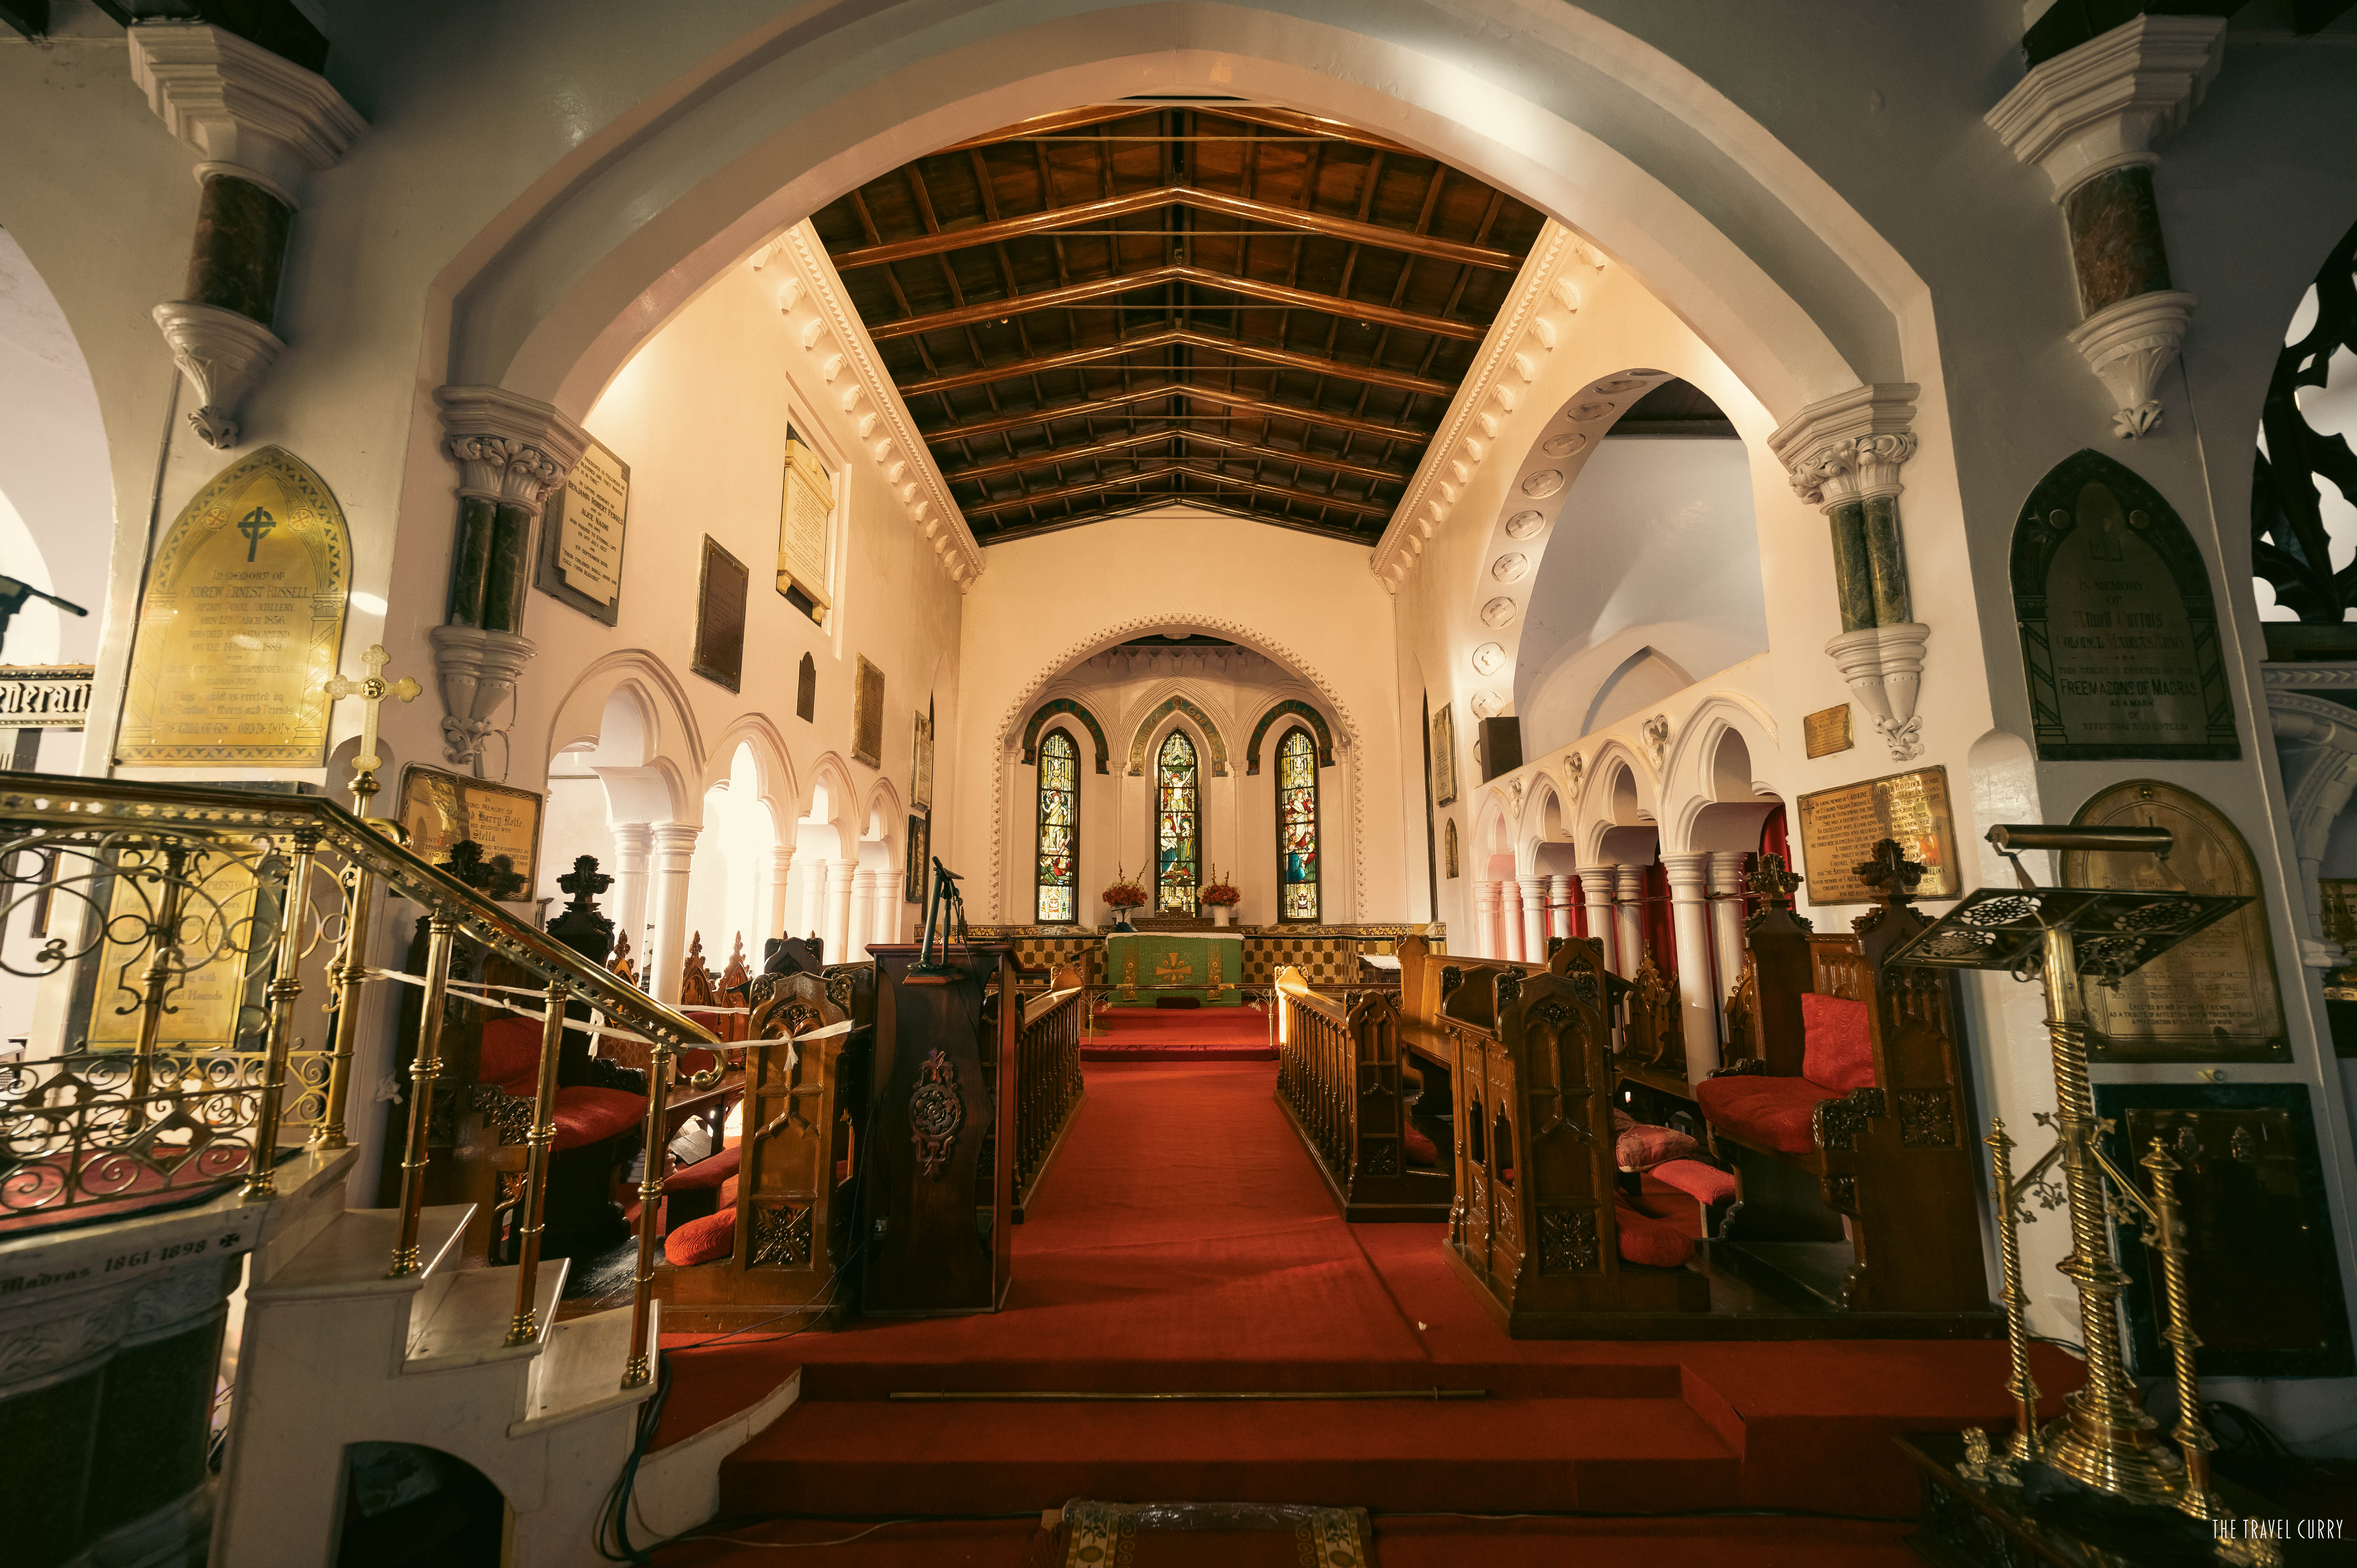 The peaceful bliss- Inside St. Stephen's Churcch